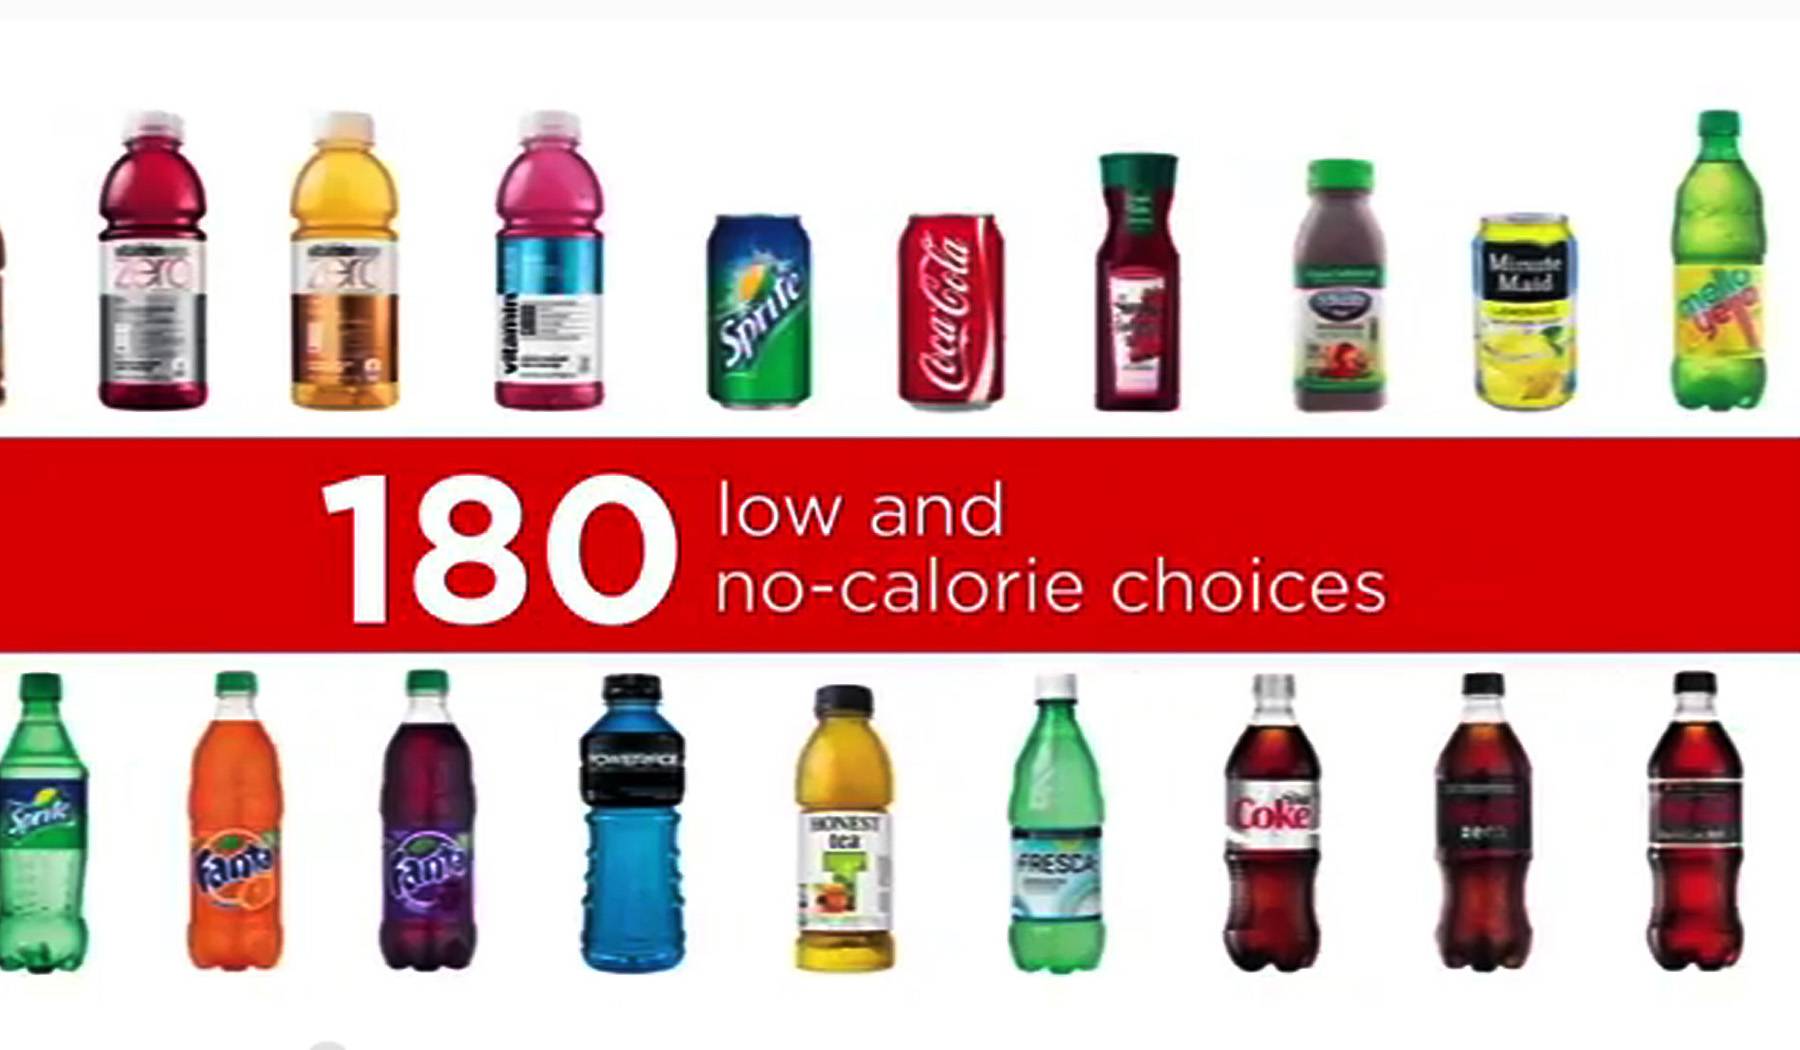 Coca-Cola Addresses Obesity Crisis in New Ads